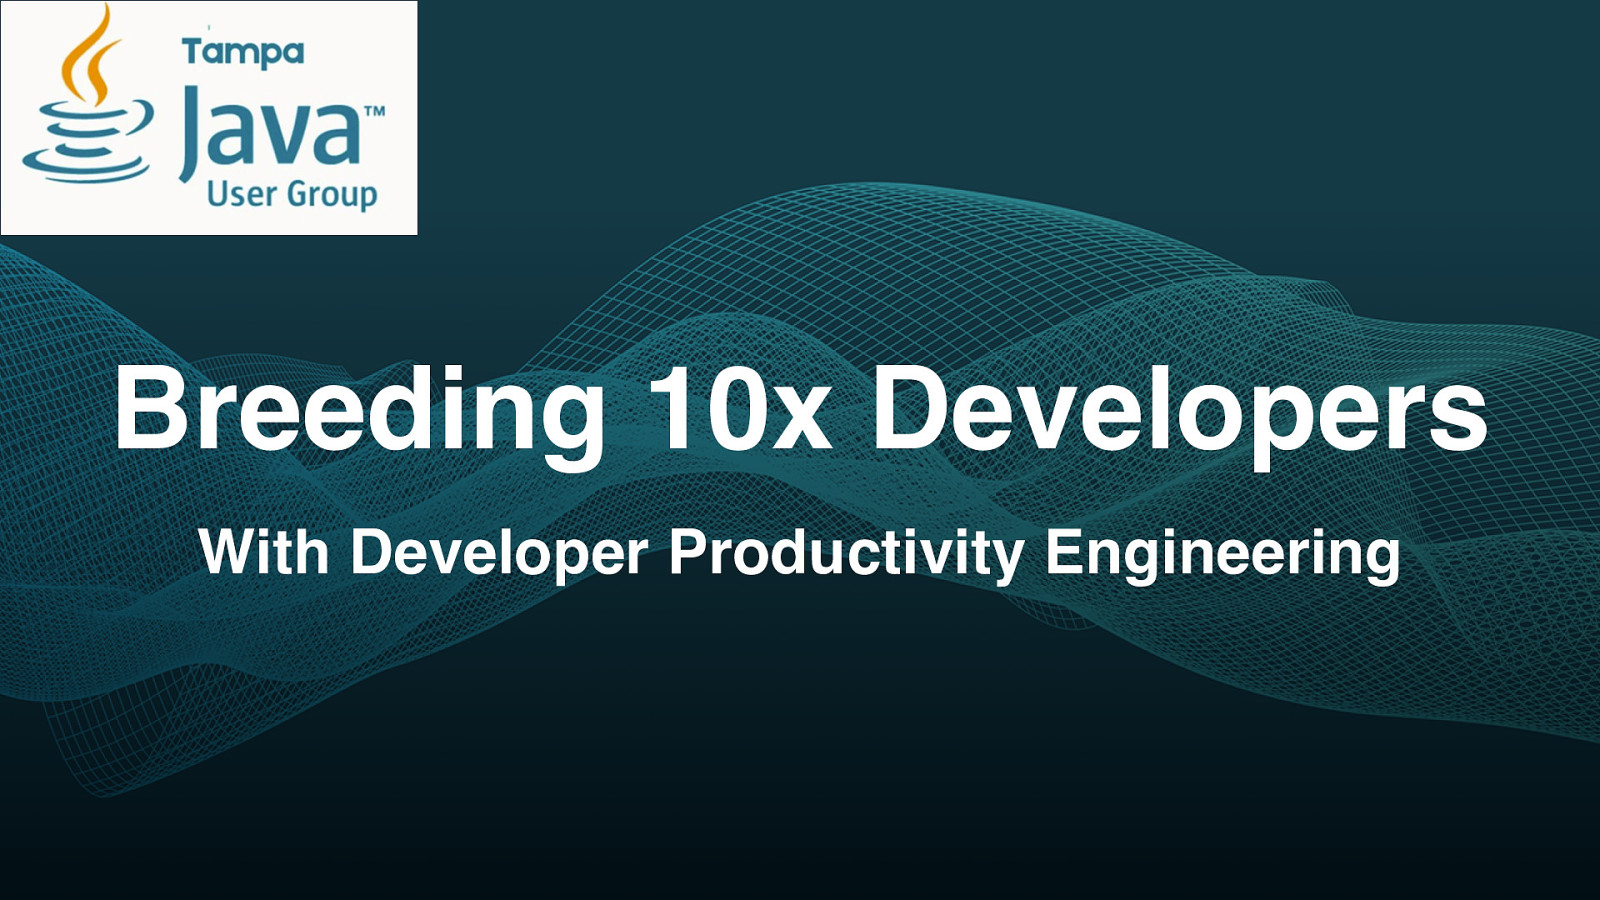 Breeding 10x Developers with Developer Productivity Engineering